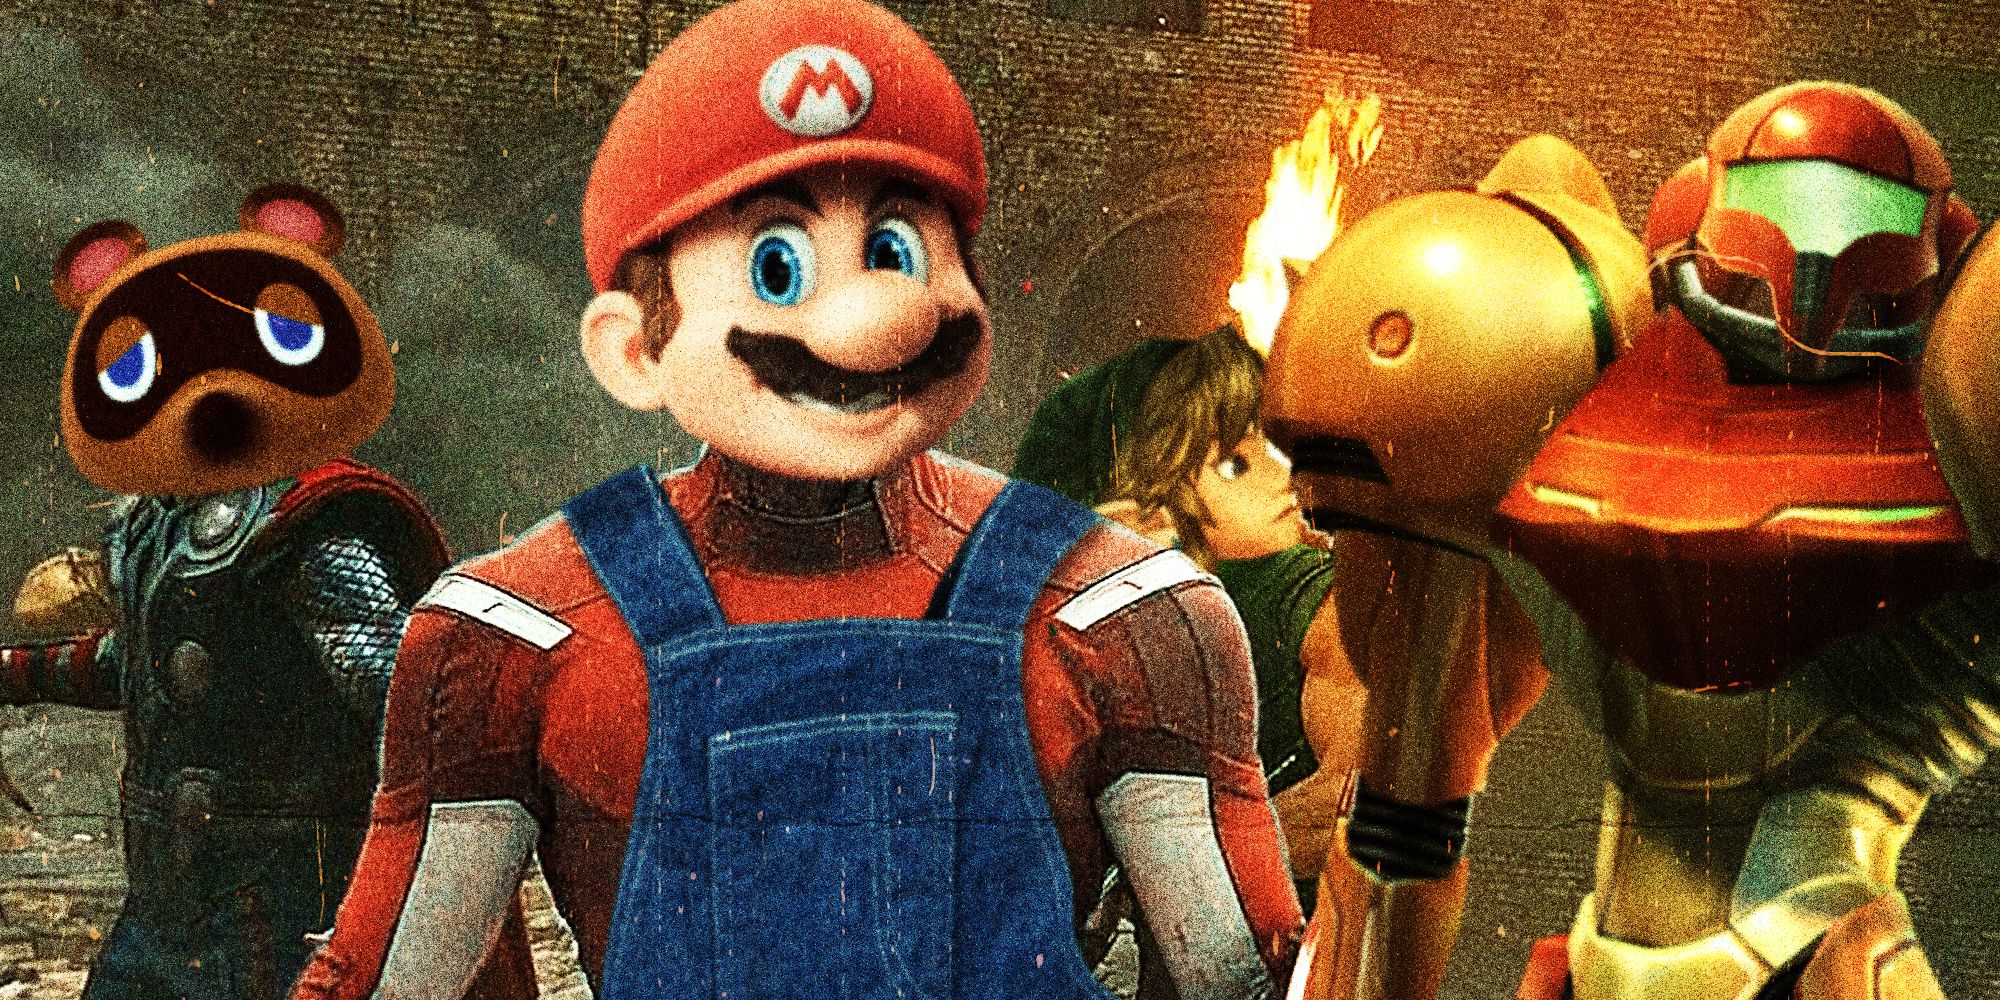 The Nintenders - Tom Nook, Mario, Link, and Samus as Avengers